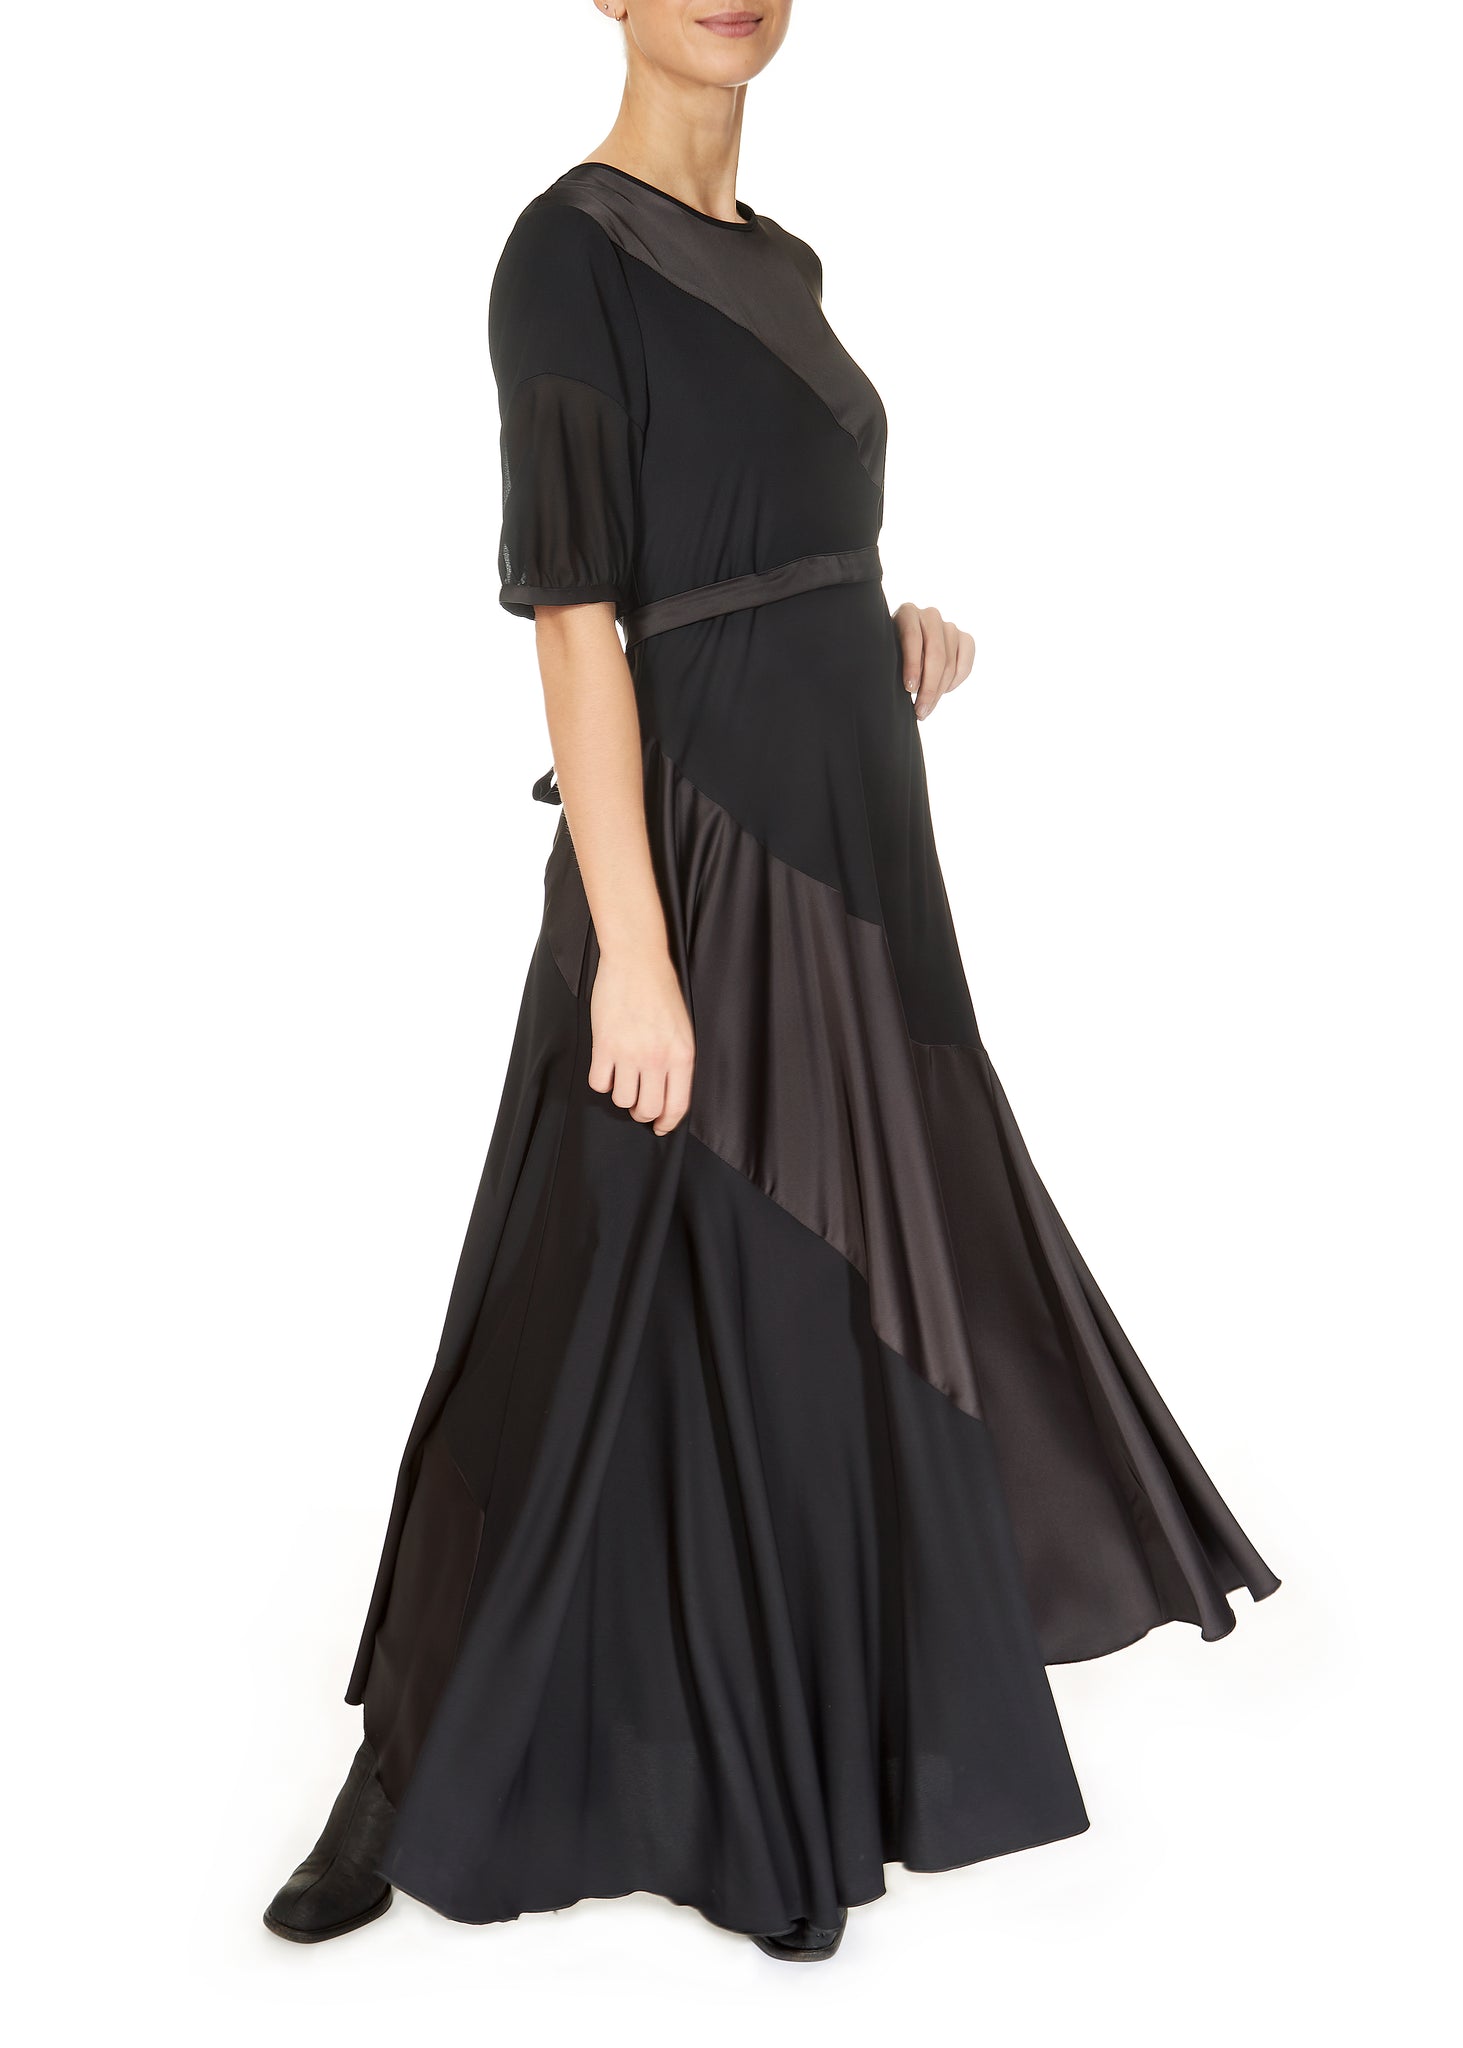 'Surpass' Black Satin Long Dress - Jessimara